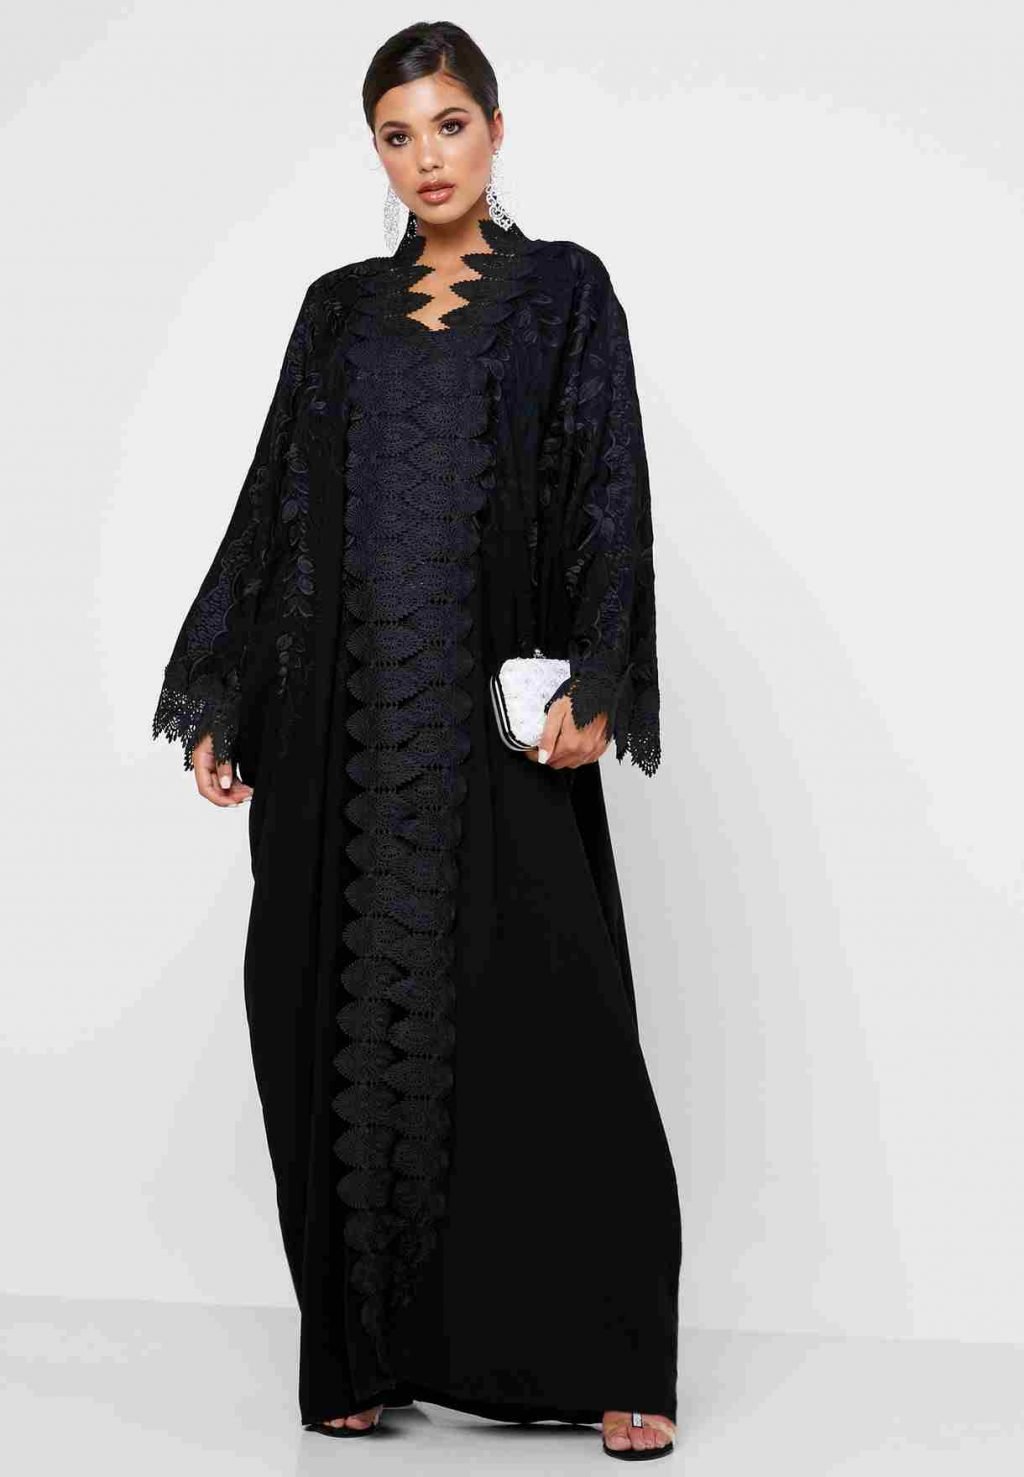 10 New Abaya Styles for Muslim Women in 2022